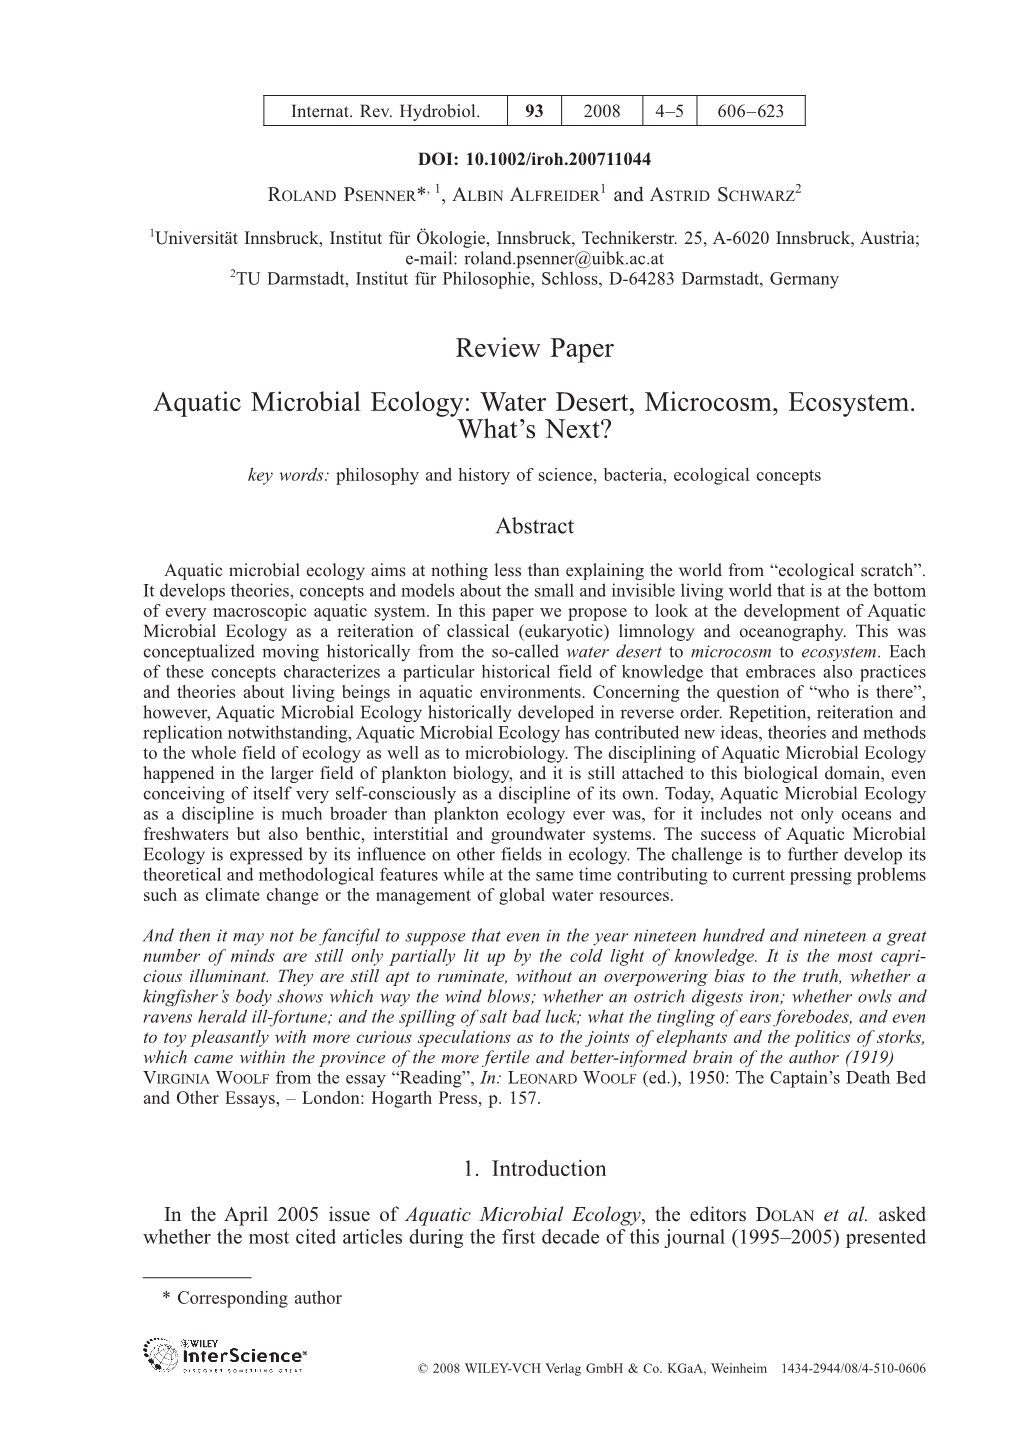 Aquatic Microbial Ecology: Water Desert, Microcosm, Ecosystem